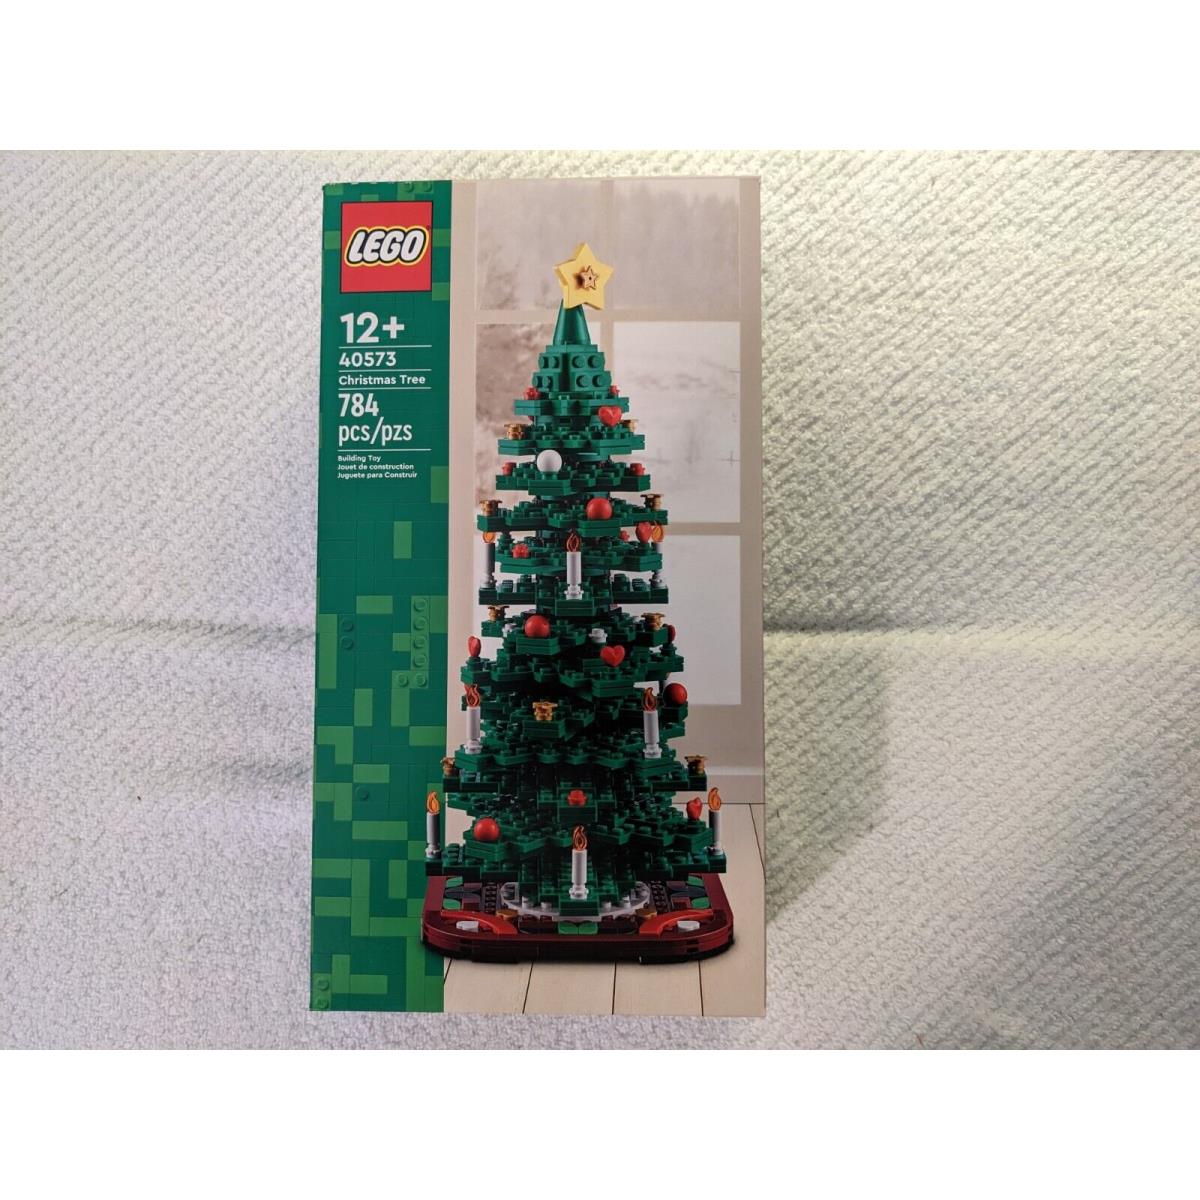 Lego 40573 Christmas Tree 2 in 1 784 Pcs